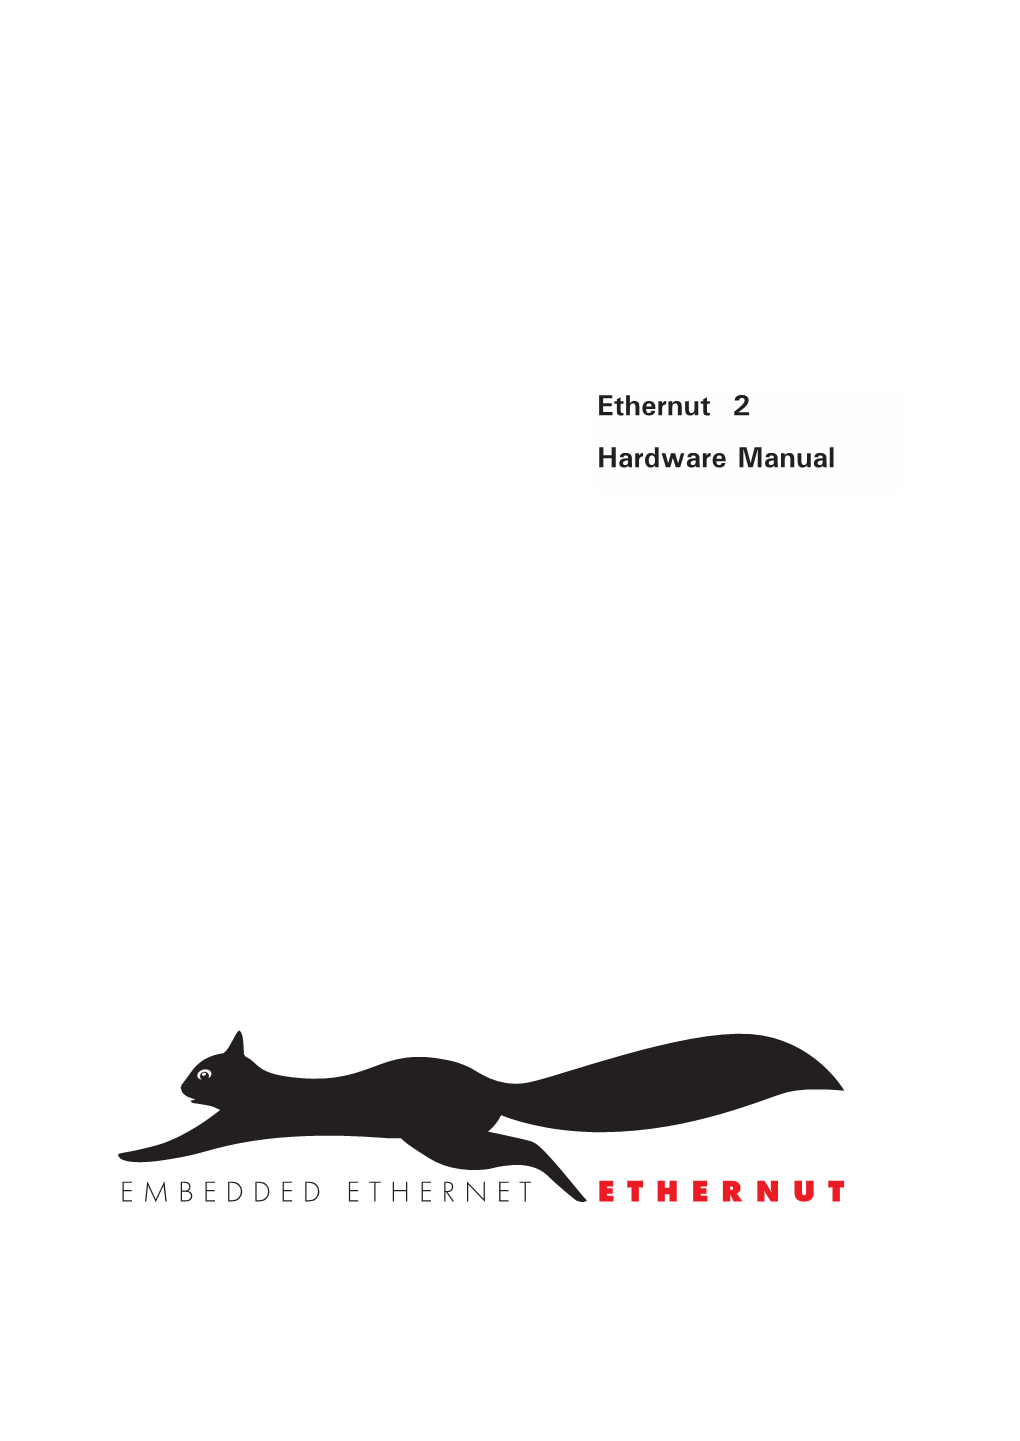 Ethernut 2 Hardware Manual Version 1.0 Copyright 2003 Egnite Software Gmbh